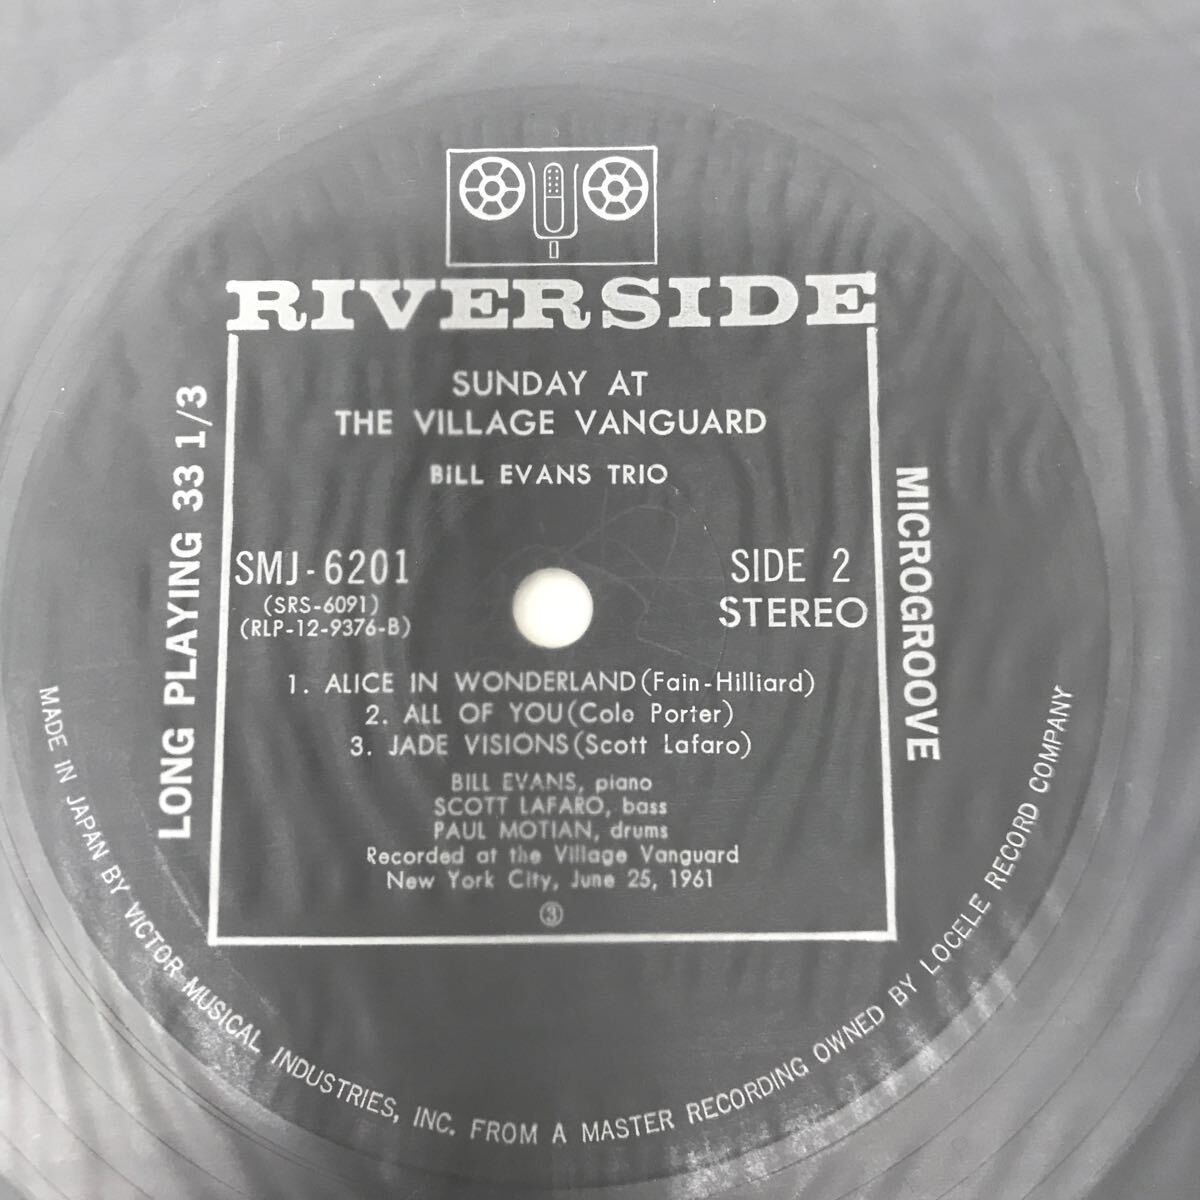 I0516A3 ビル・エヴァンス BILL EVANS TRIO SUNDAY AT THE VILLAGE VANGUARD LP レコード 音楽 ジャズ JAZZ SMJ-6201 国内盤 _画像7